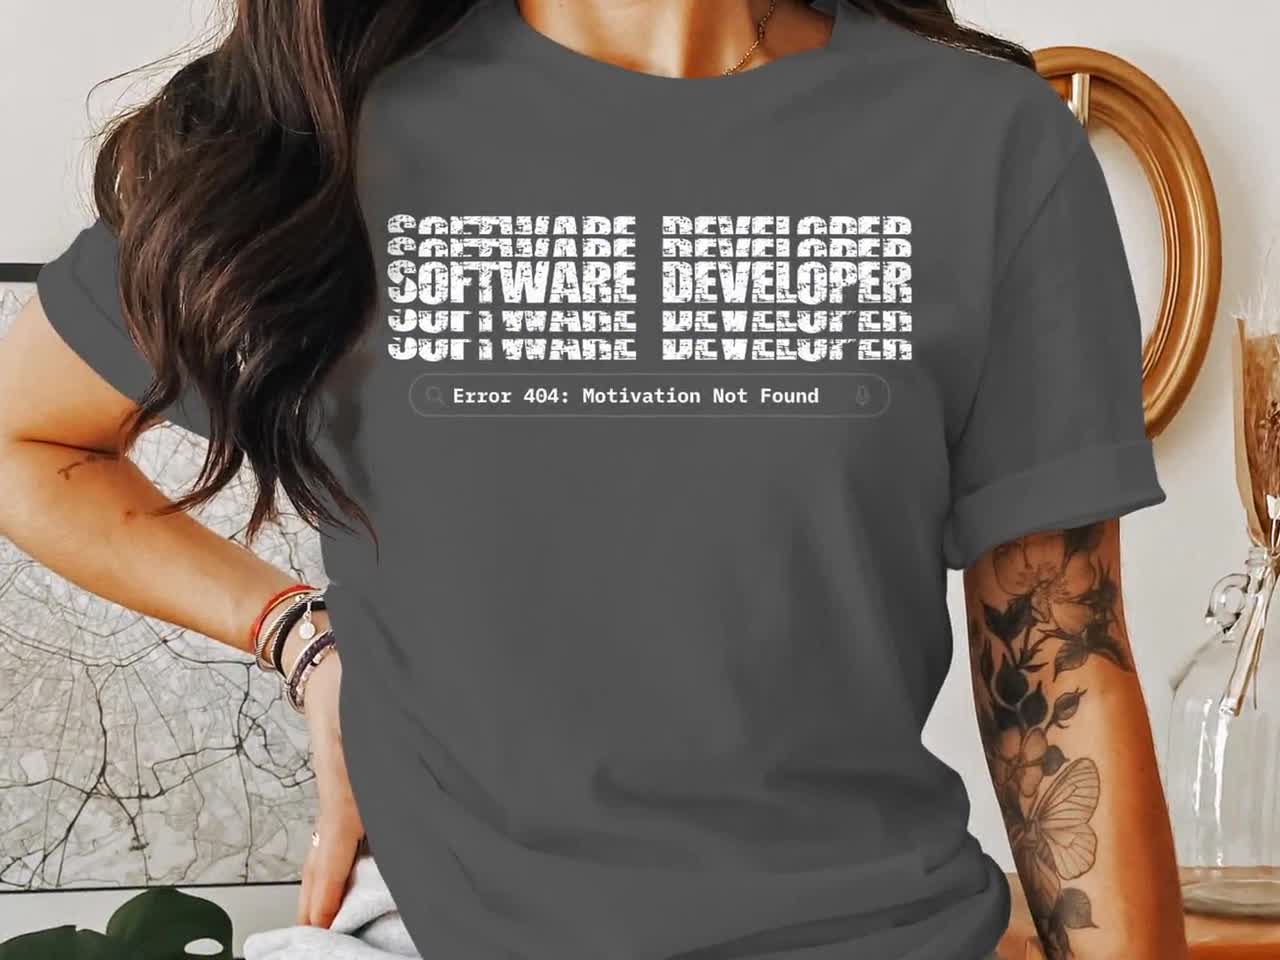 Is my shirt not approved? - Art Design Support - Developer Forum